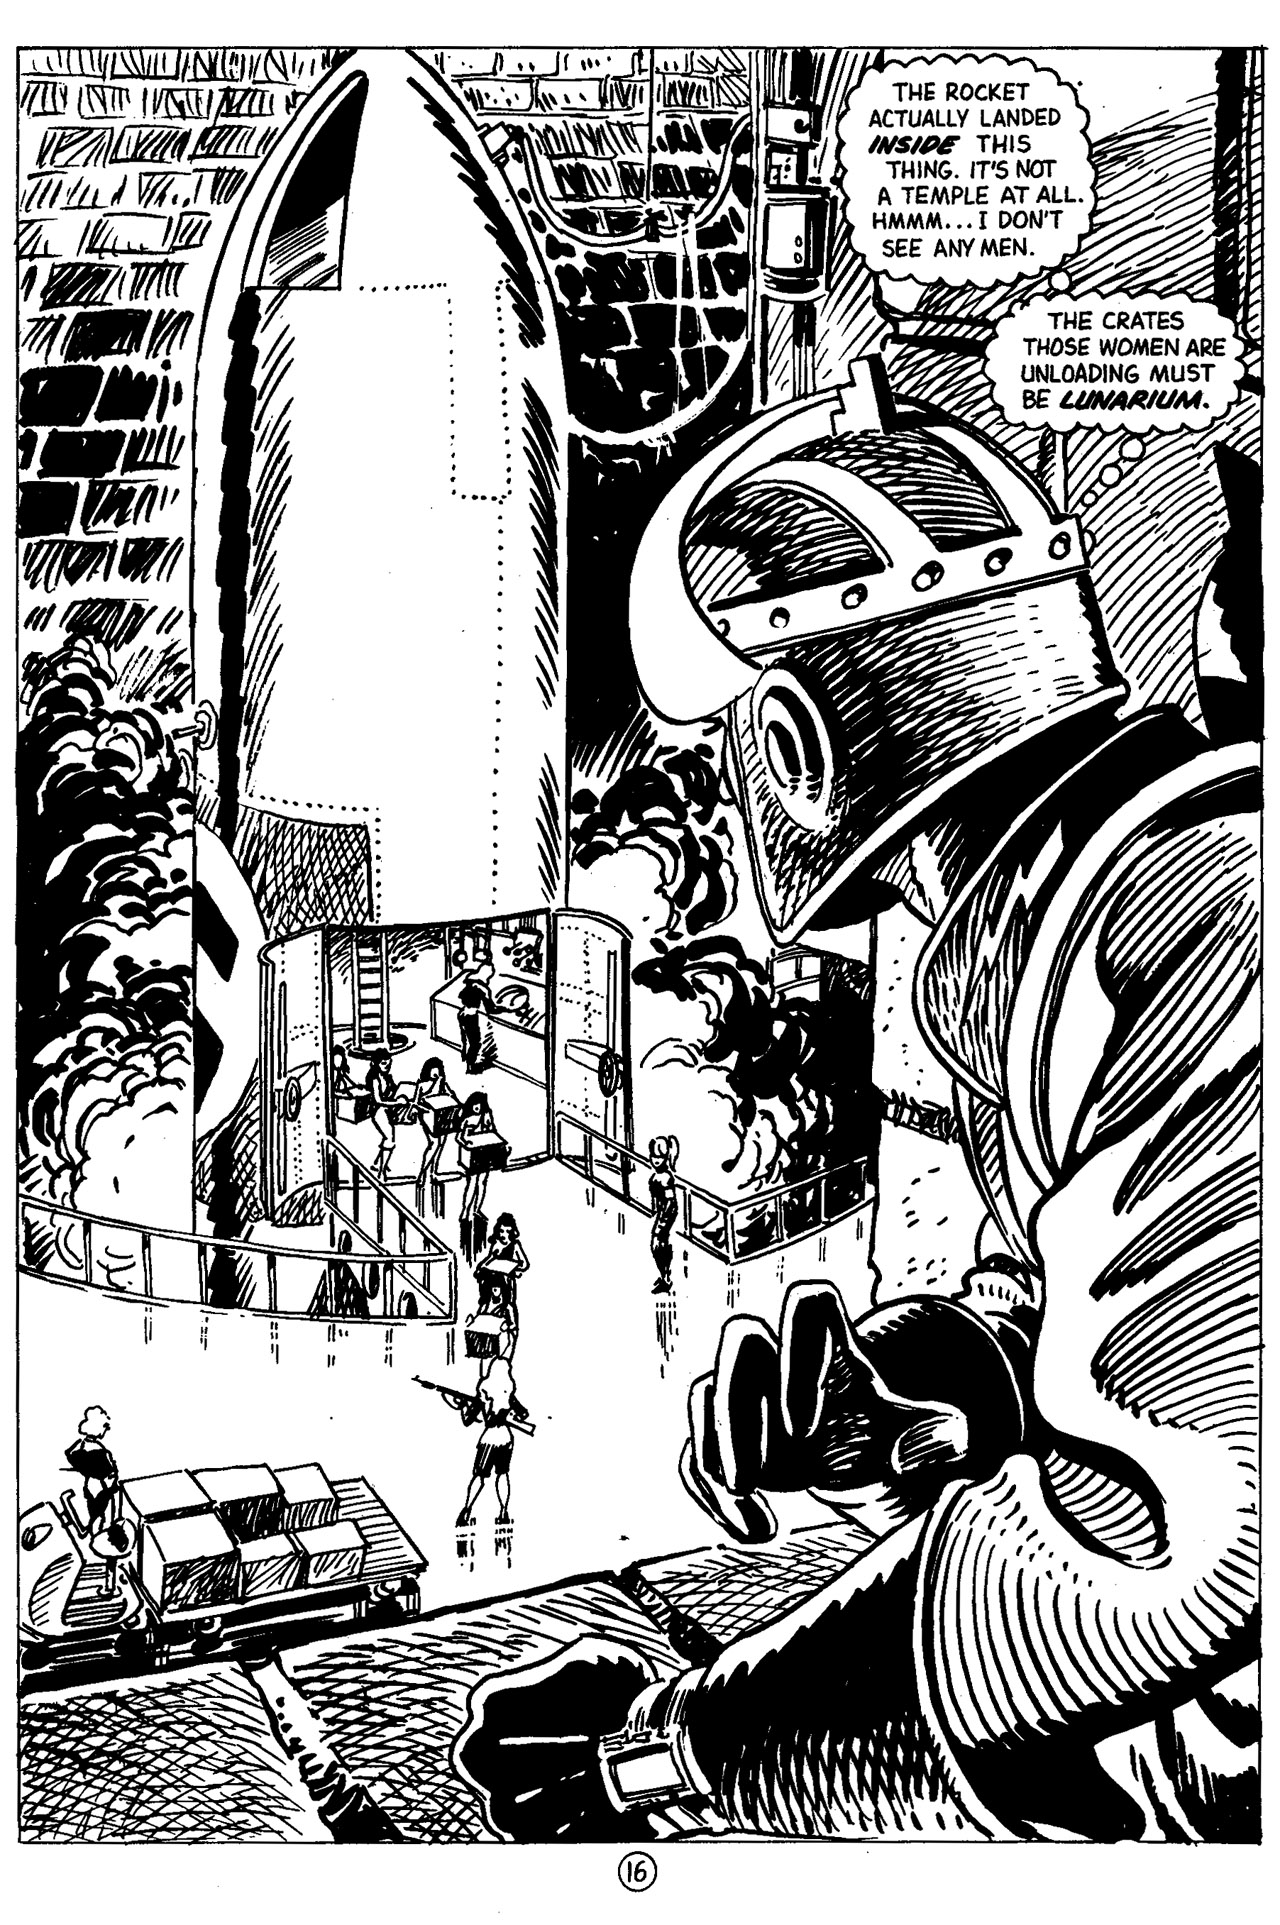 Read online Rocket Ranger comic -  Issue #4 - 18